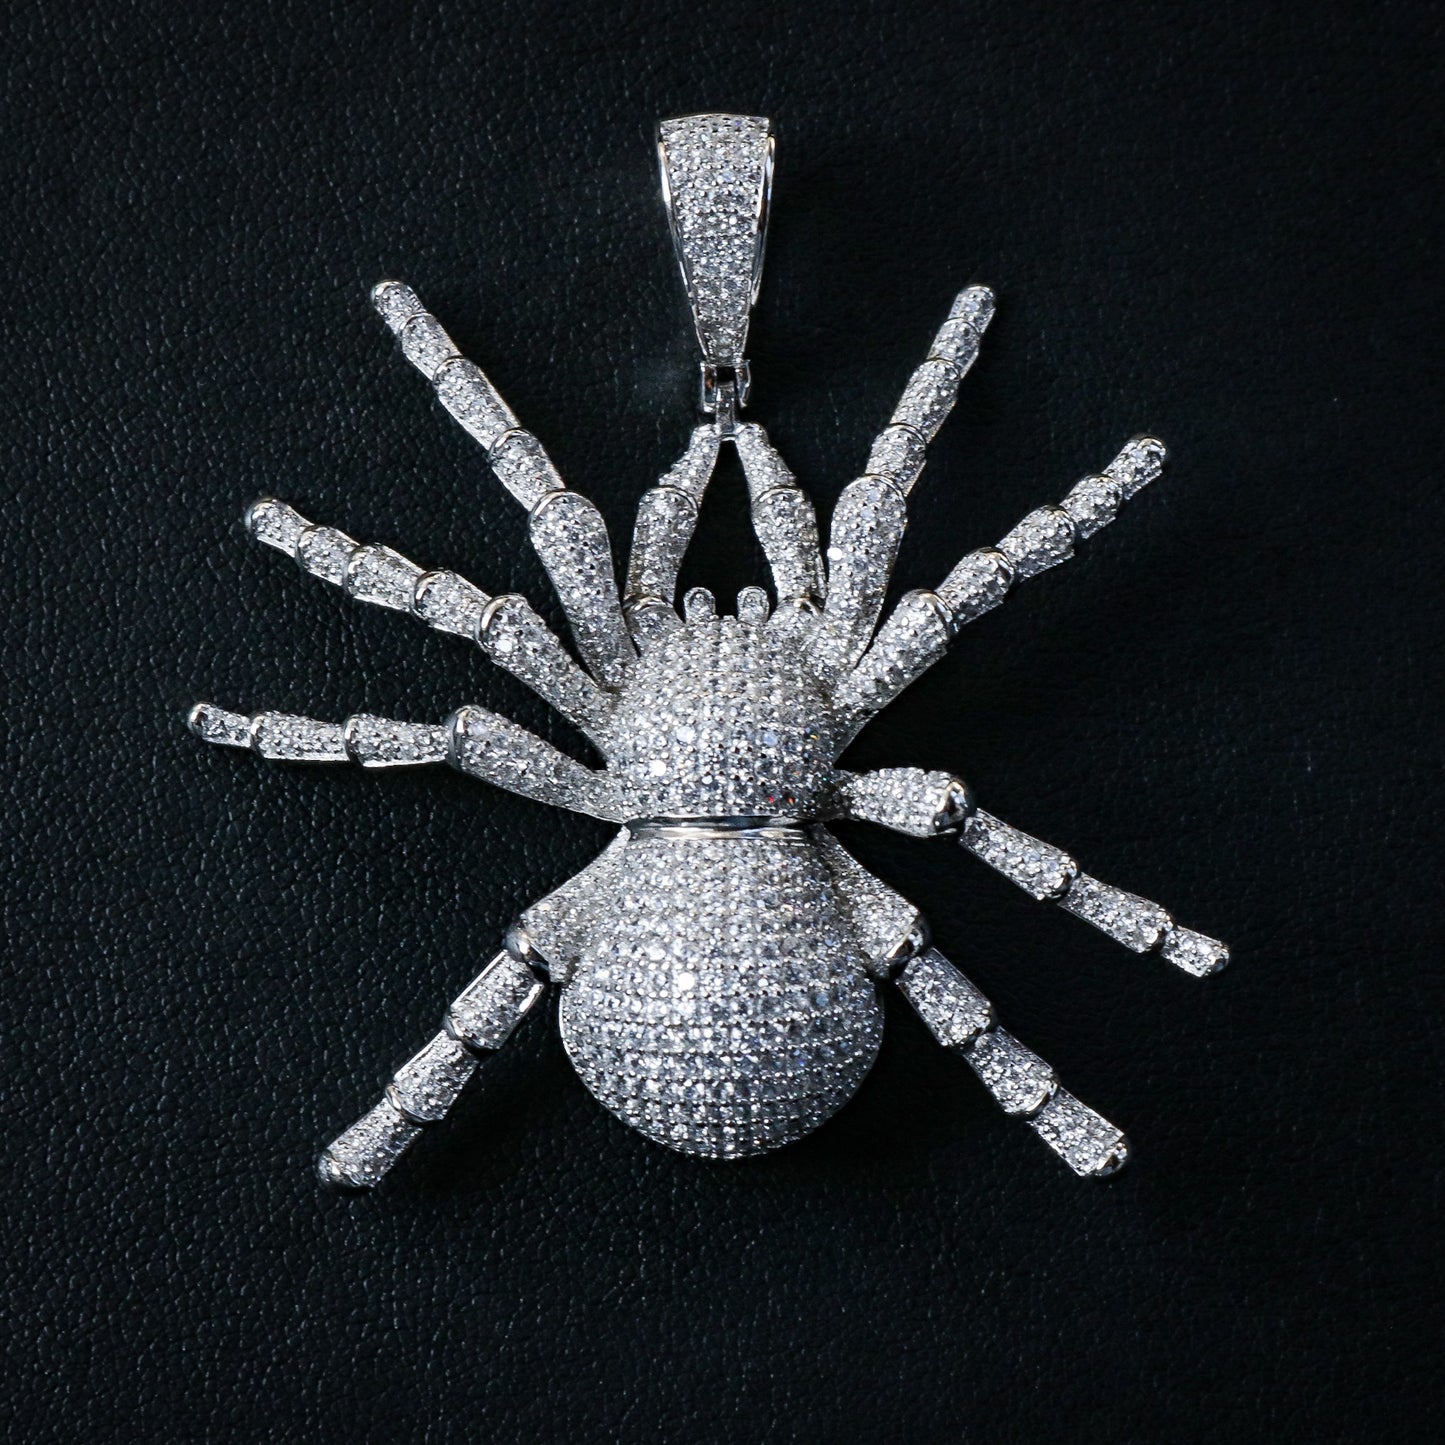 Big Spider Pendant - 925 Silver